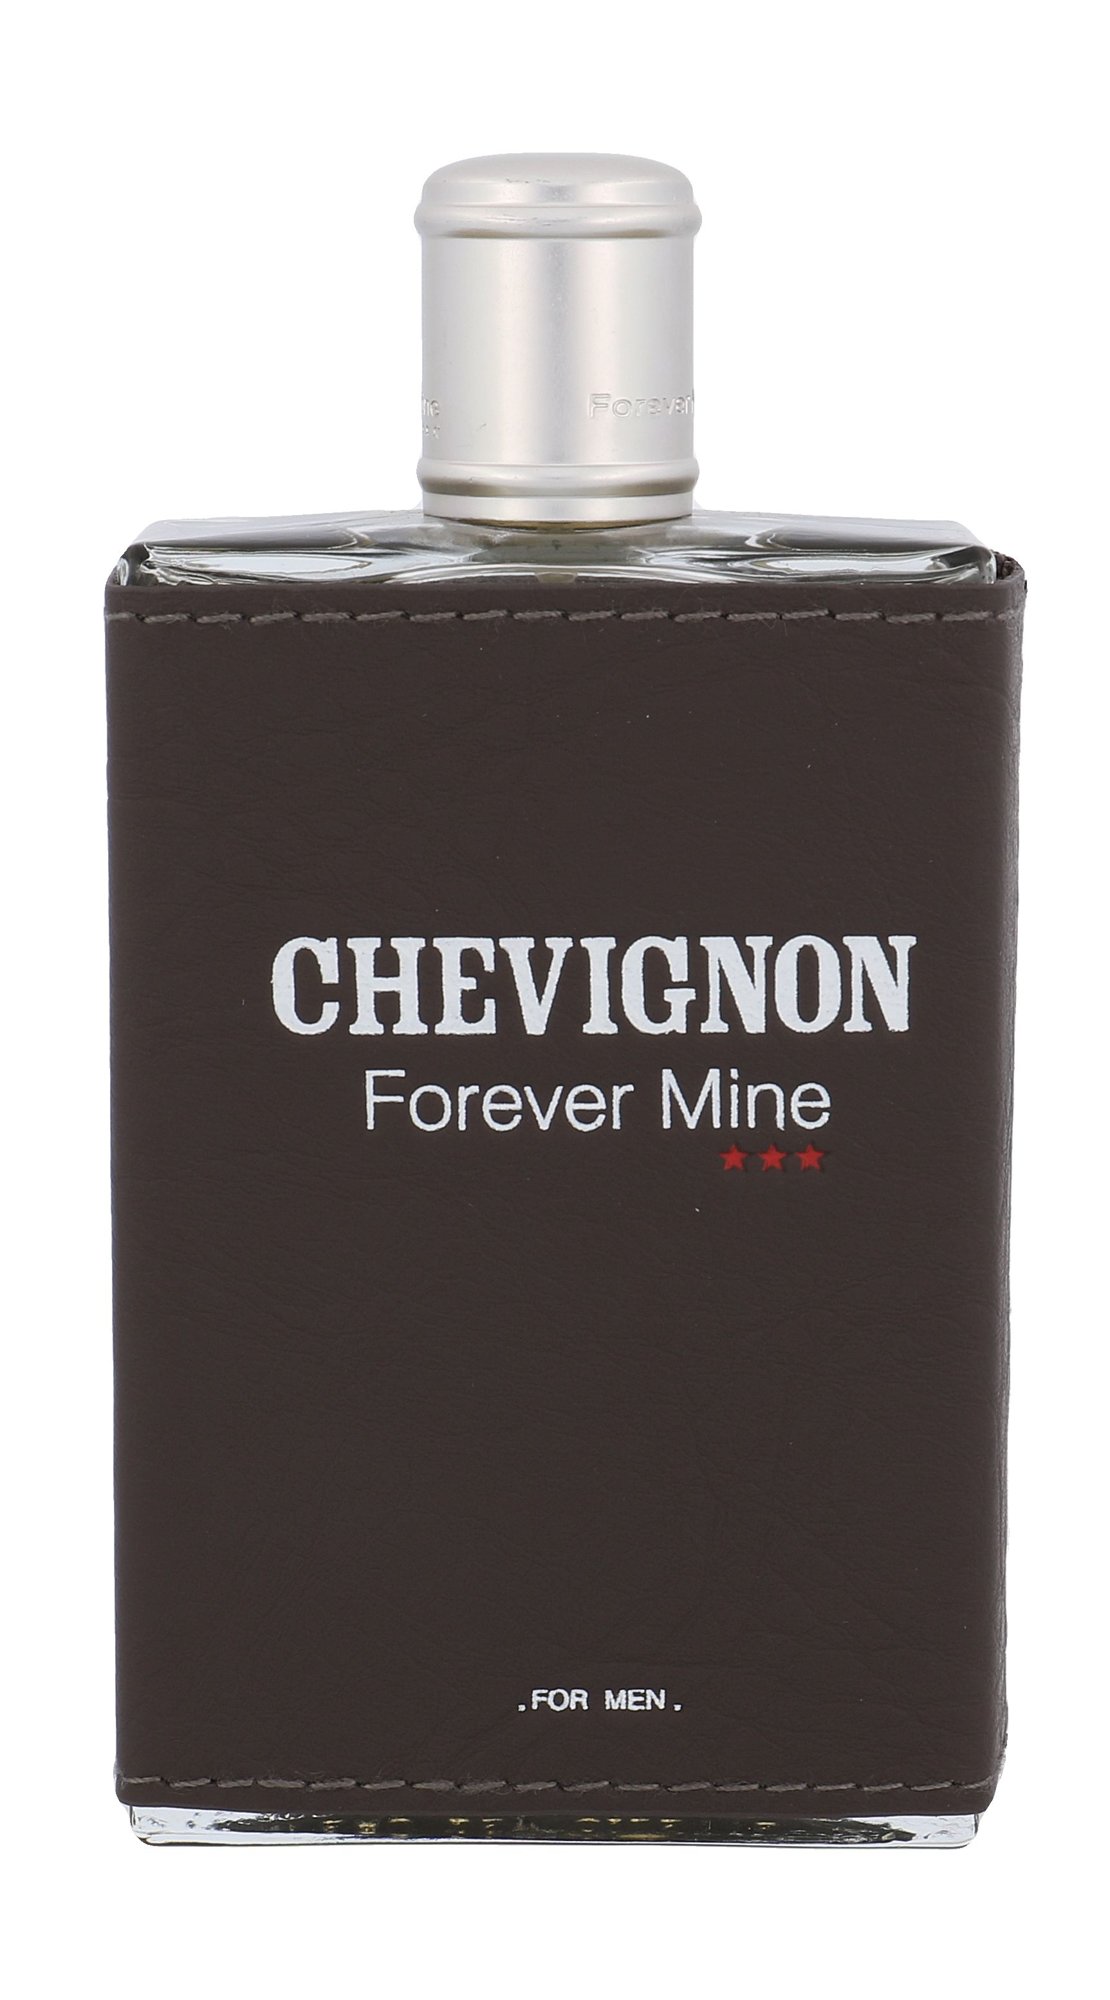 Chevignon Forever Mine vanduo po skutimosi